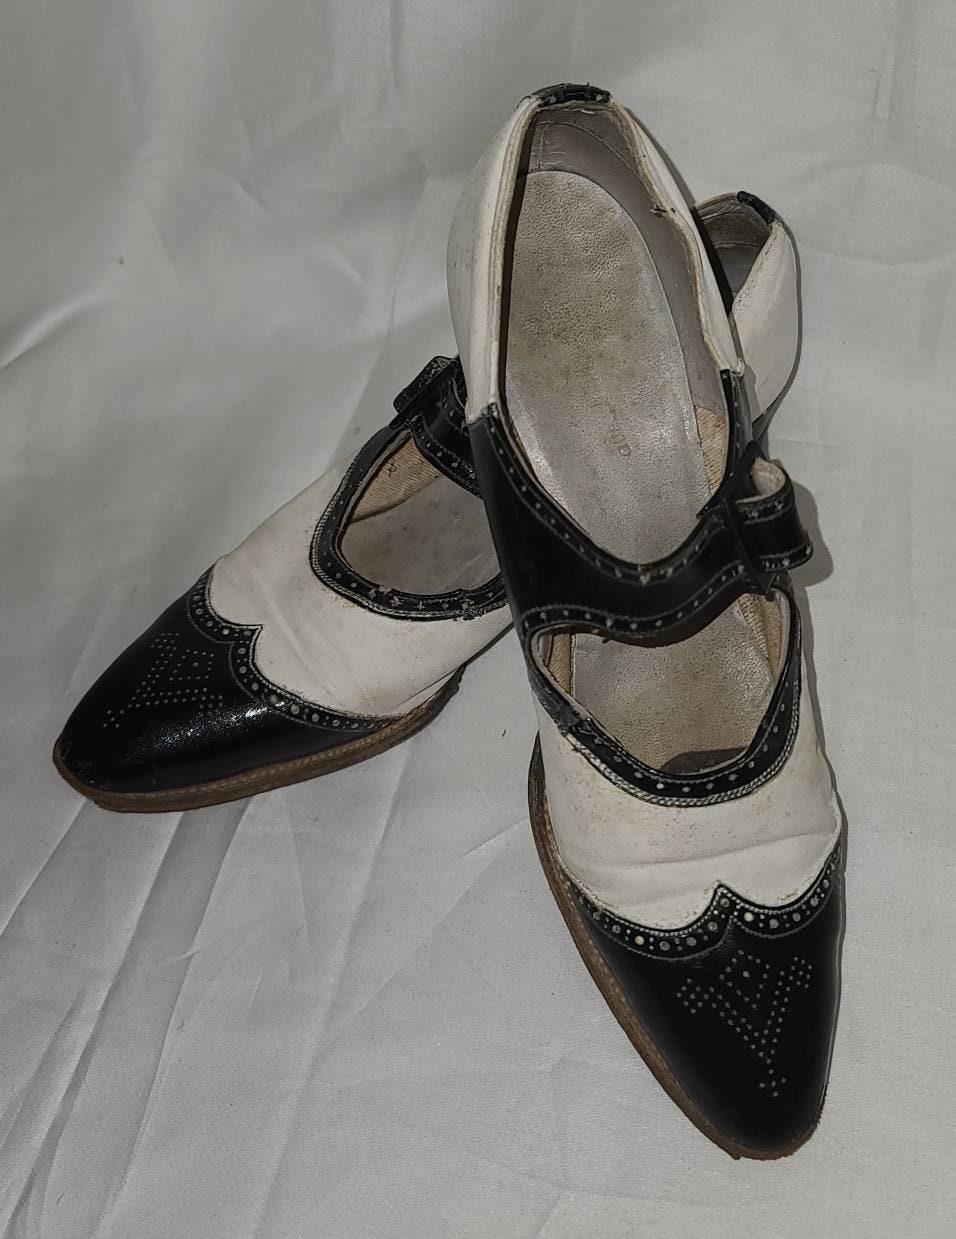 SALE Vintage 1920s Shoes Unique Black White Leather Spectator Wing Tip Shoes Plastic Buckles Mary Jane Style Art Deco Flapper